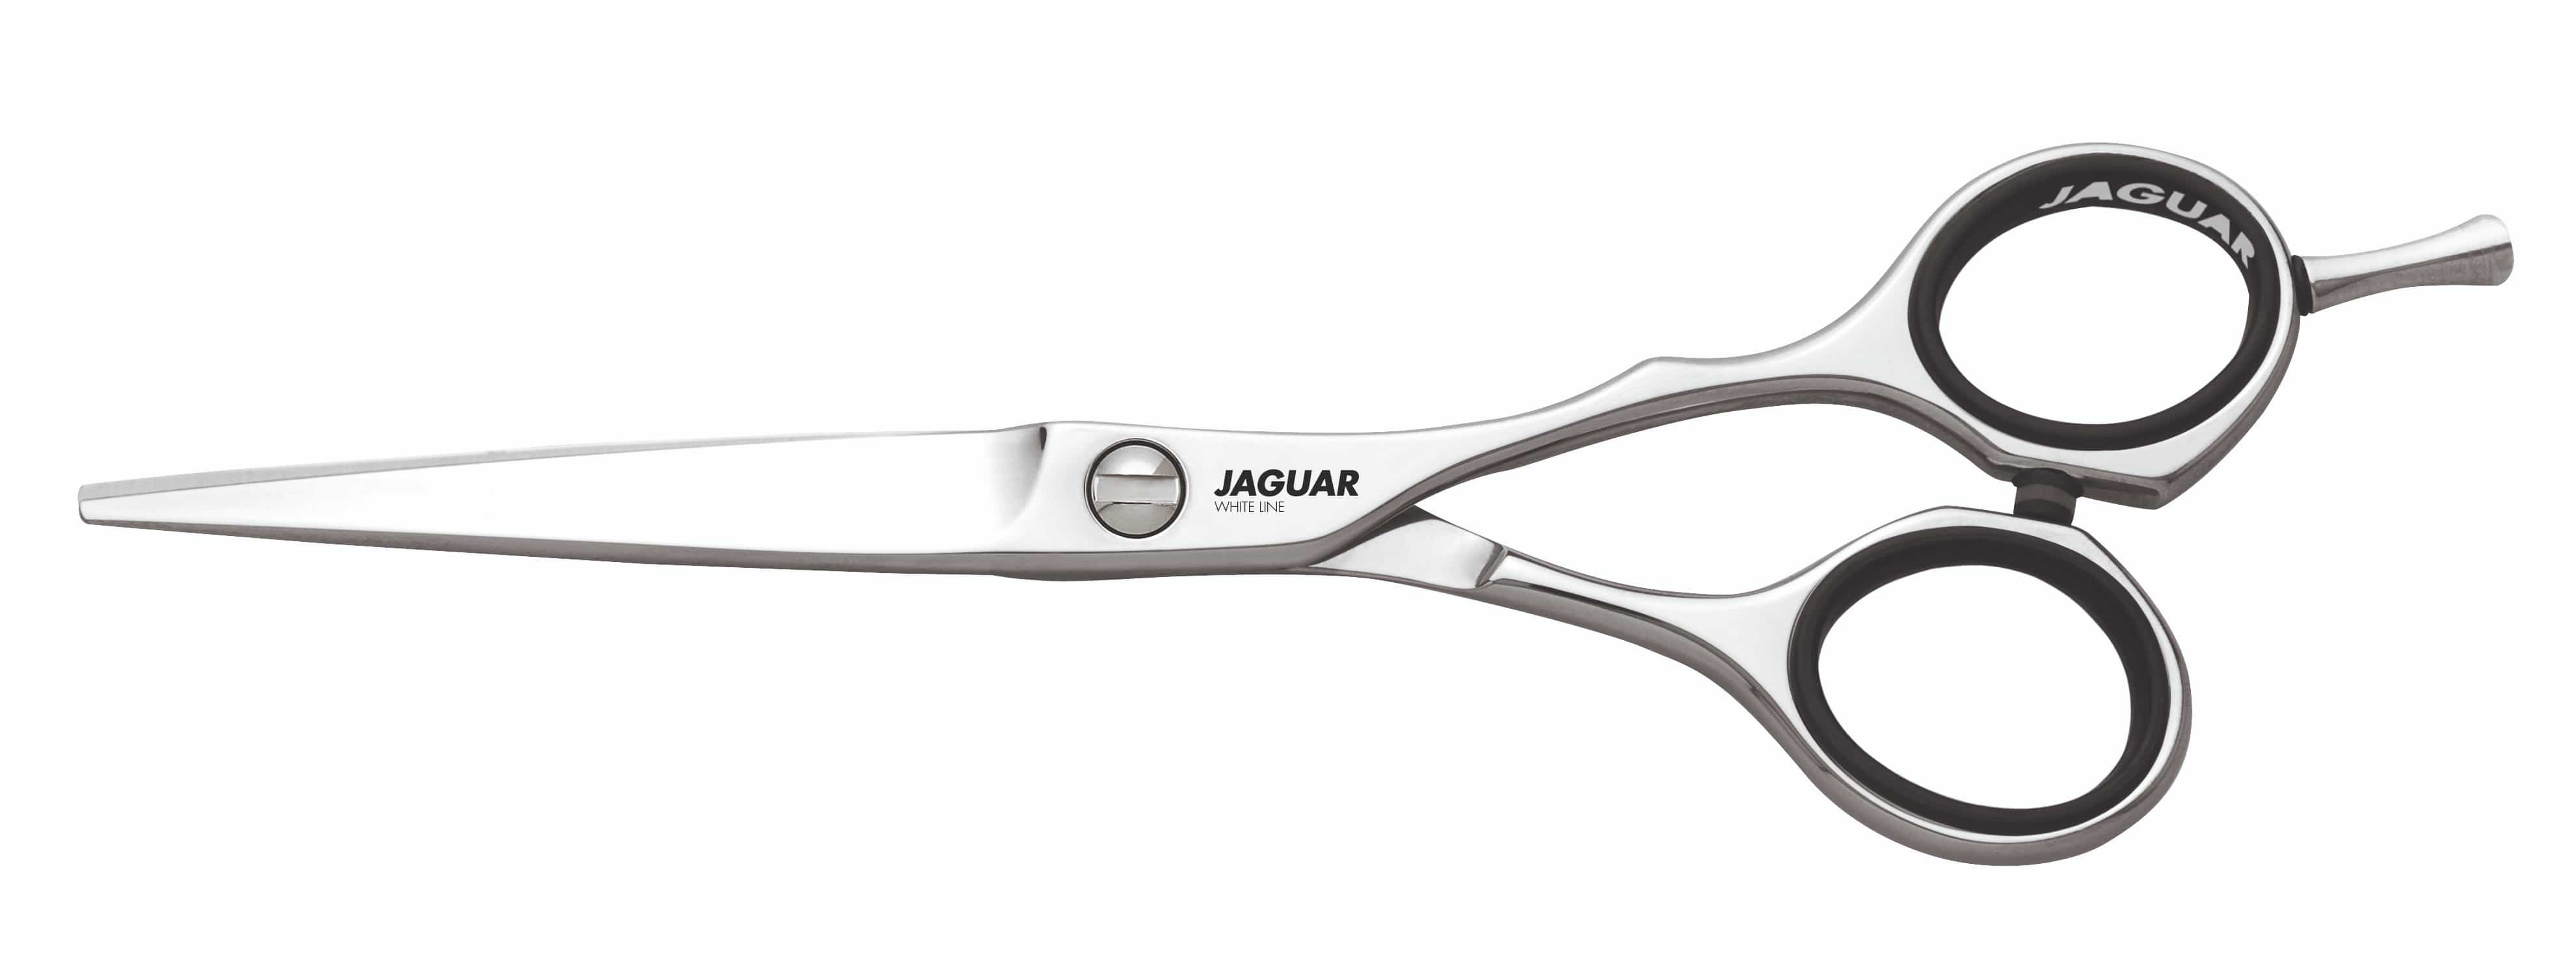 Jaguar Art BLACK PARADISE - Limited Edition Hair Scissors - Japan Scissors  USA